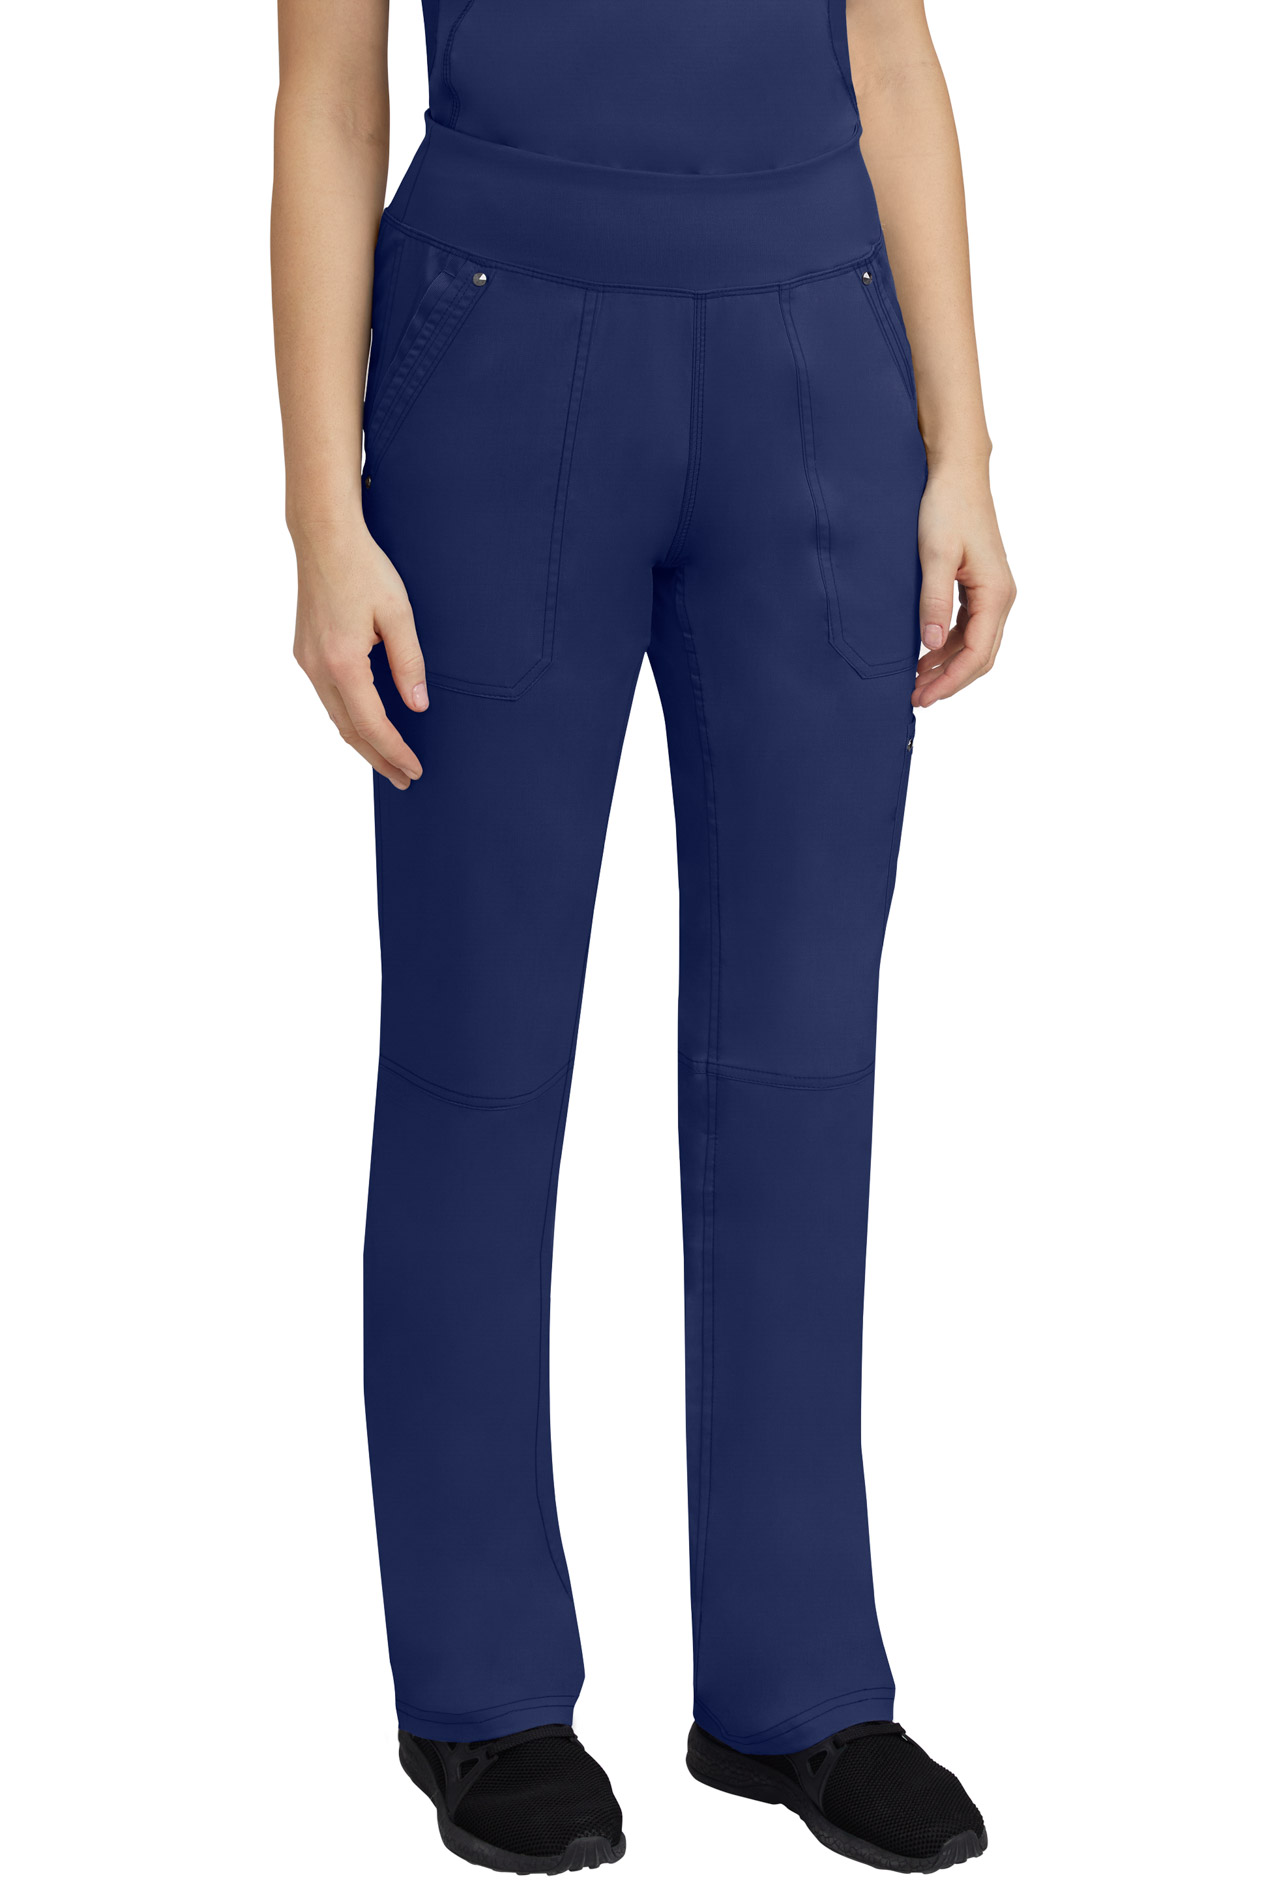 Ladies Tori Scrub Pants by Purple Label - Navy - Uniform Edit